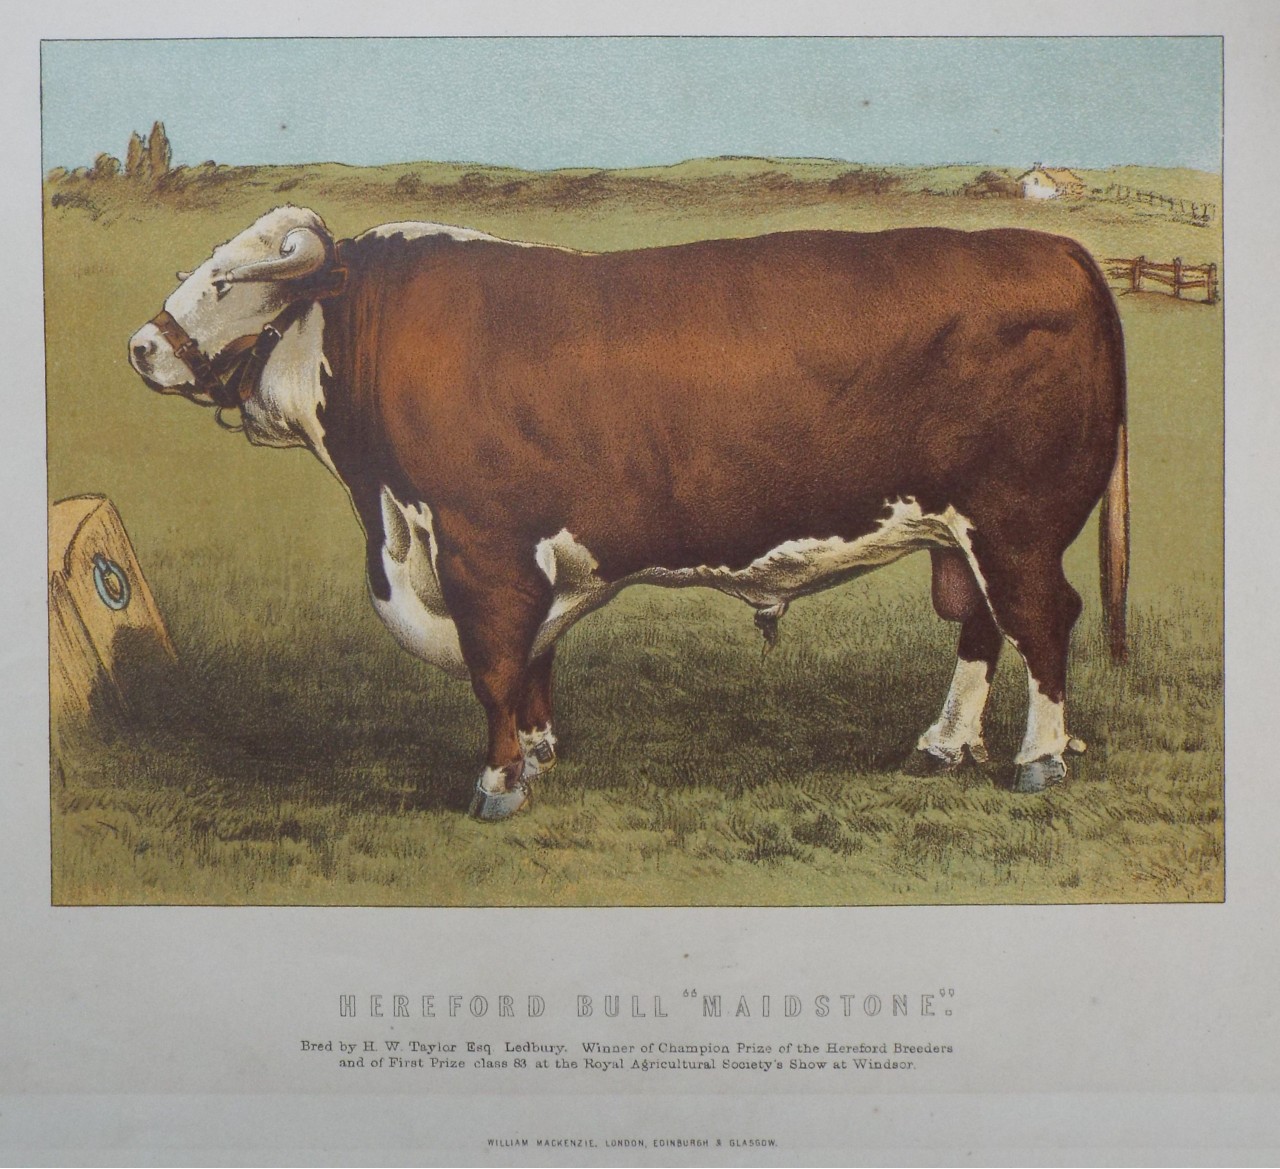 Chromo-lithograph - Hereford Bull 